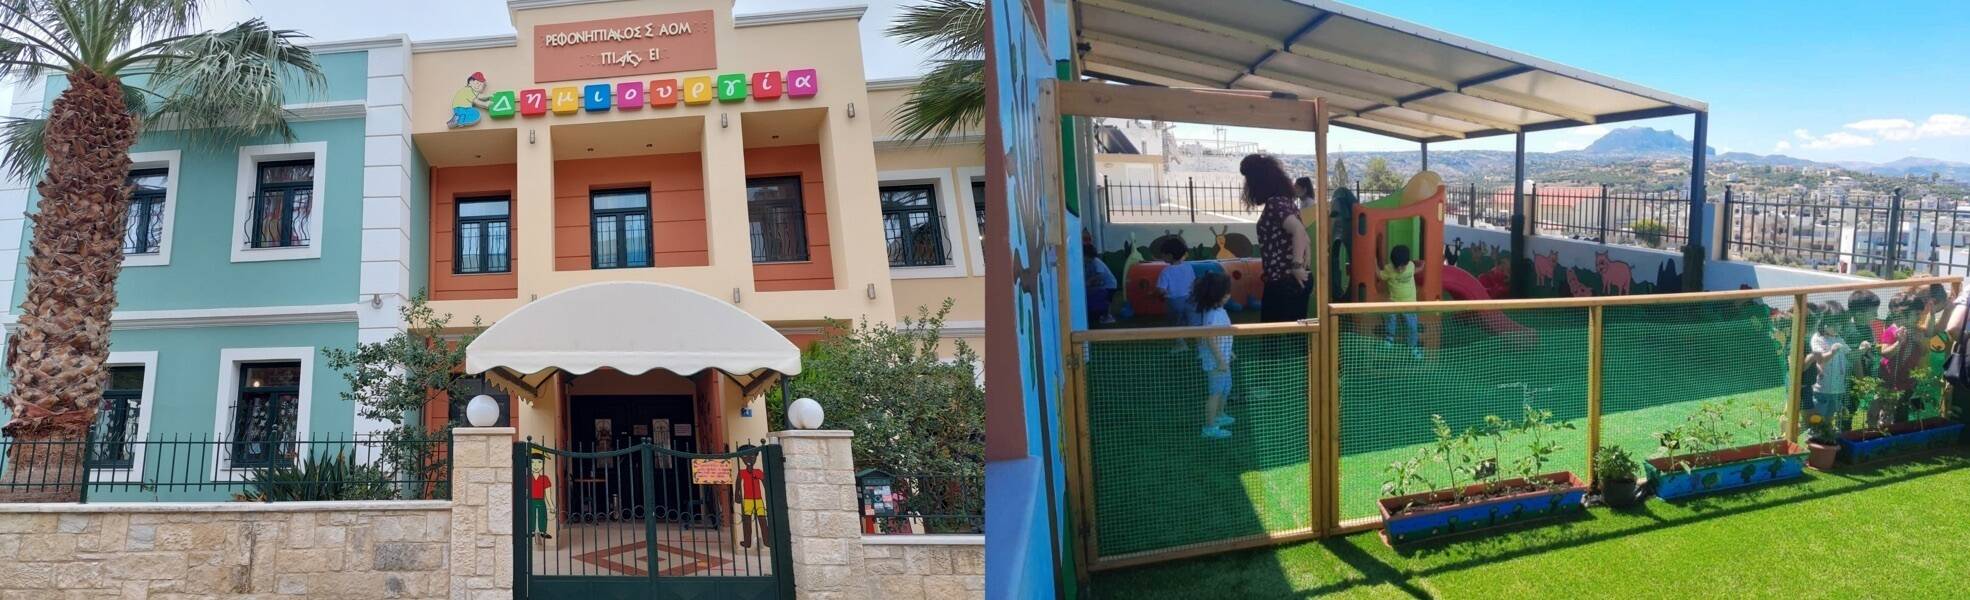 Soziale Freiwilligenarbeit im Kindergarten auf Kreta